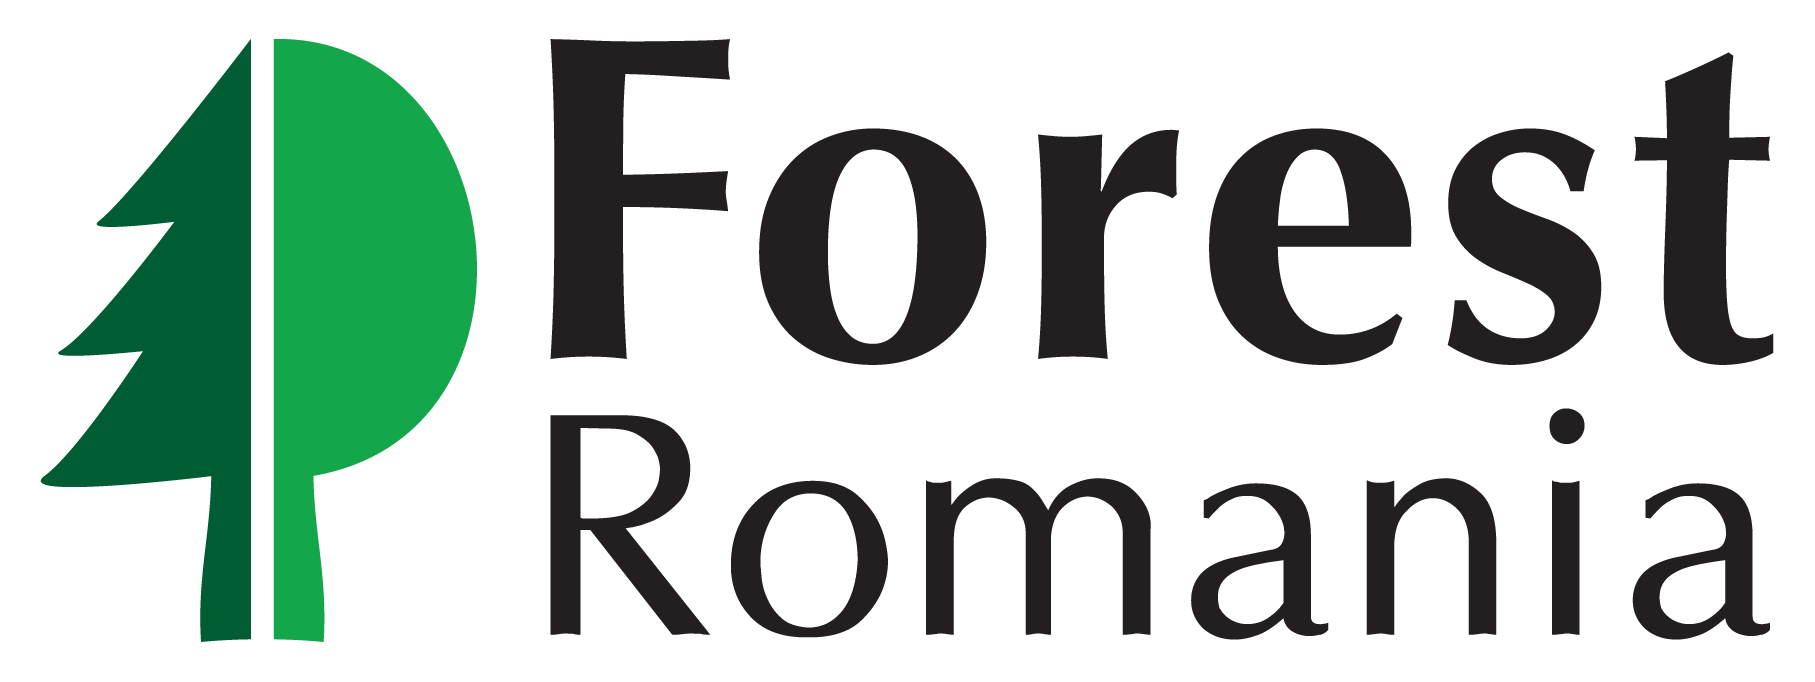 Forest_Romania